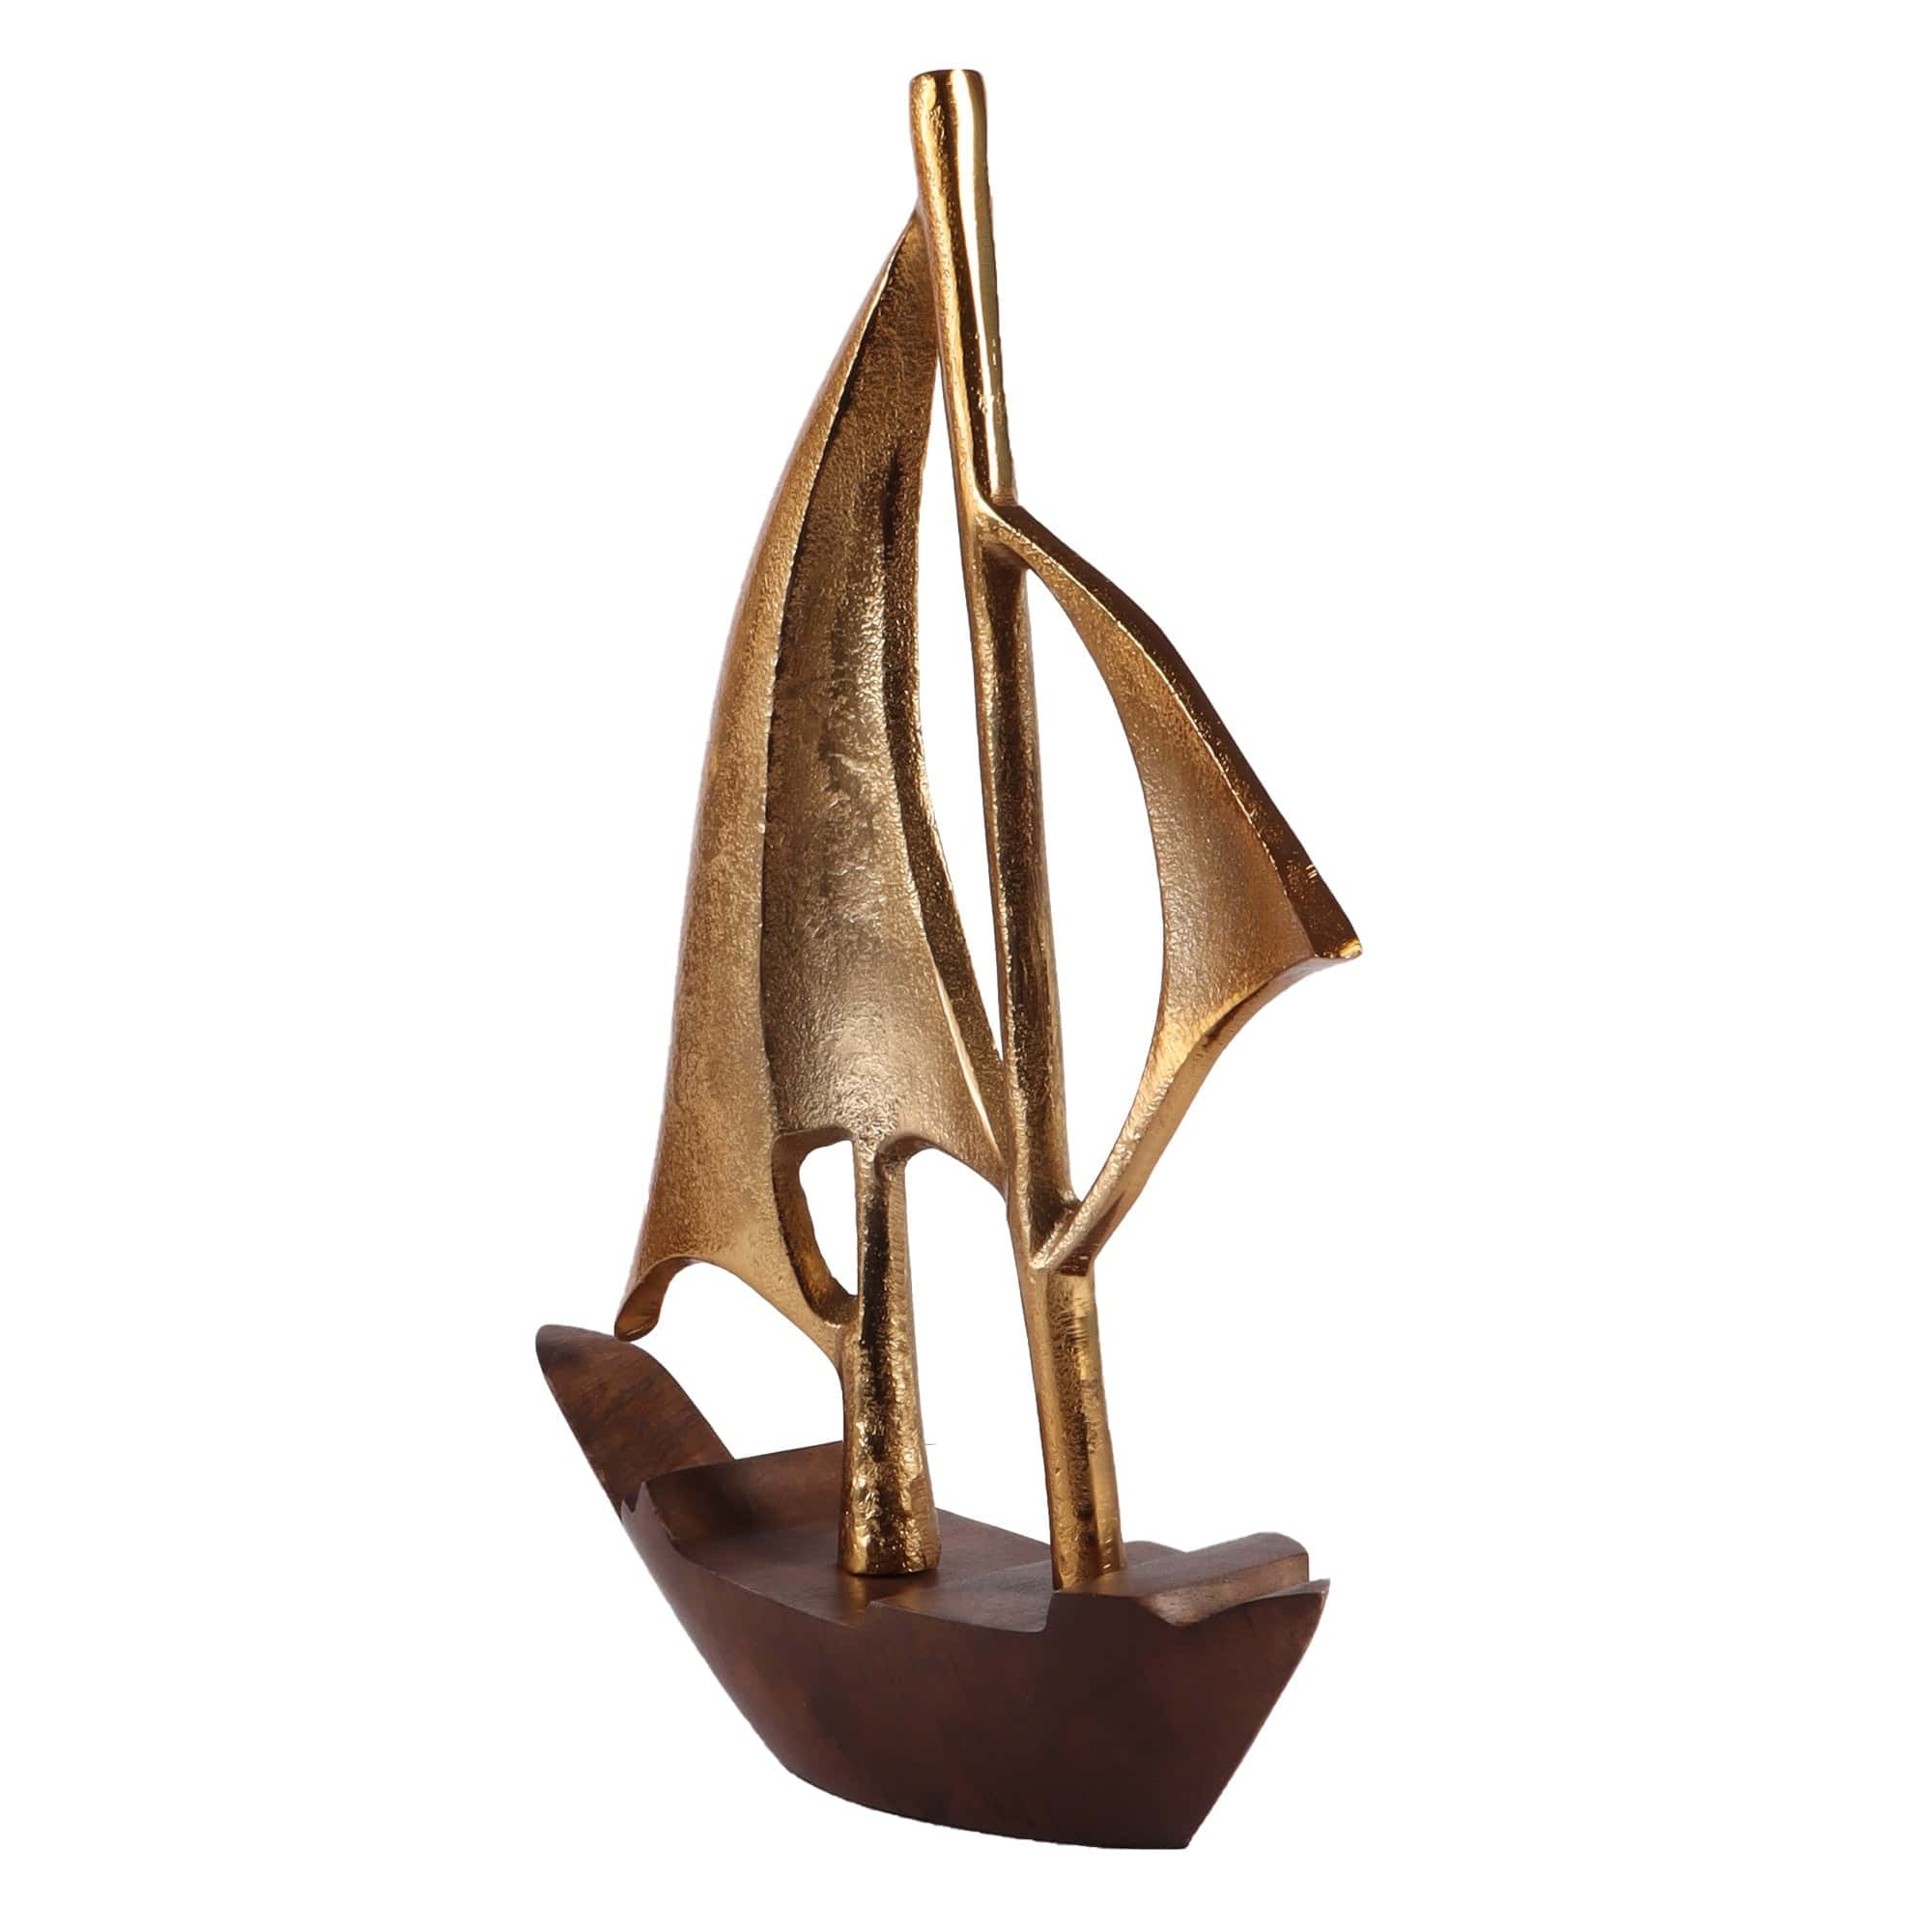 Raw Matt Gold Aluminum and Wood Handcrafted Nautical Sailing Boat